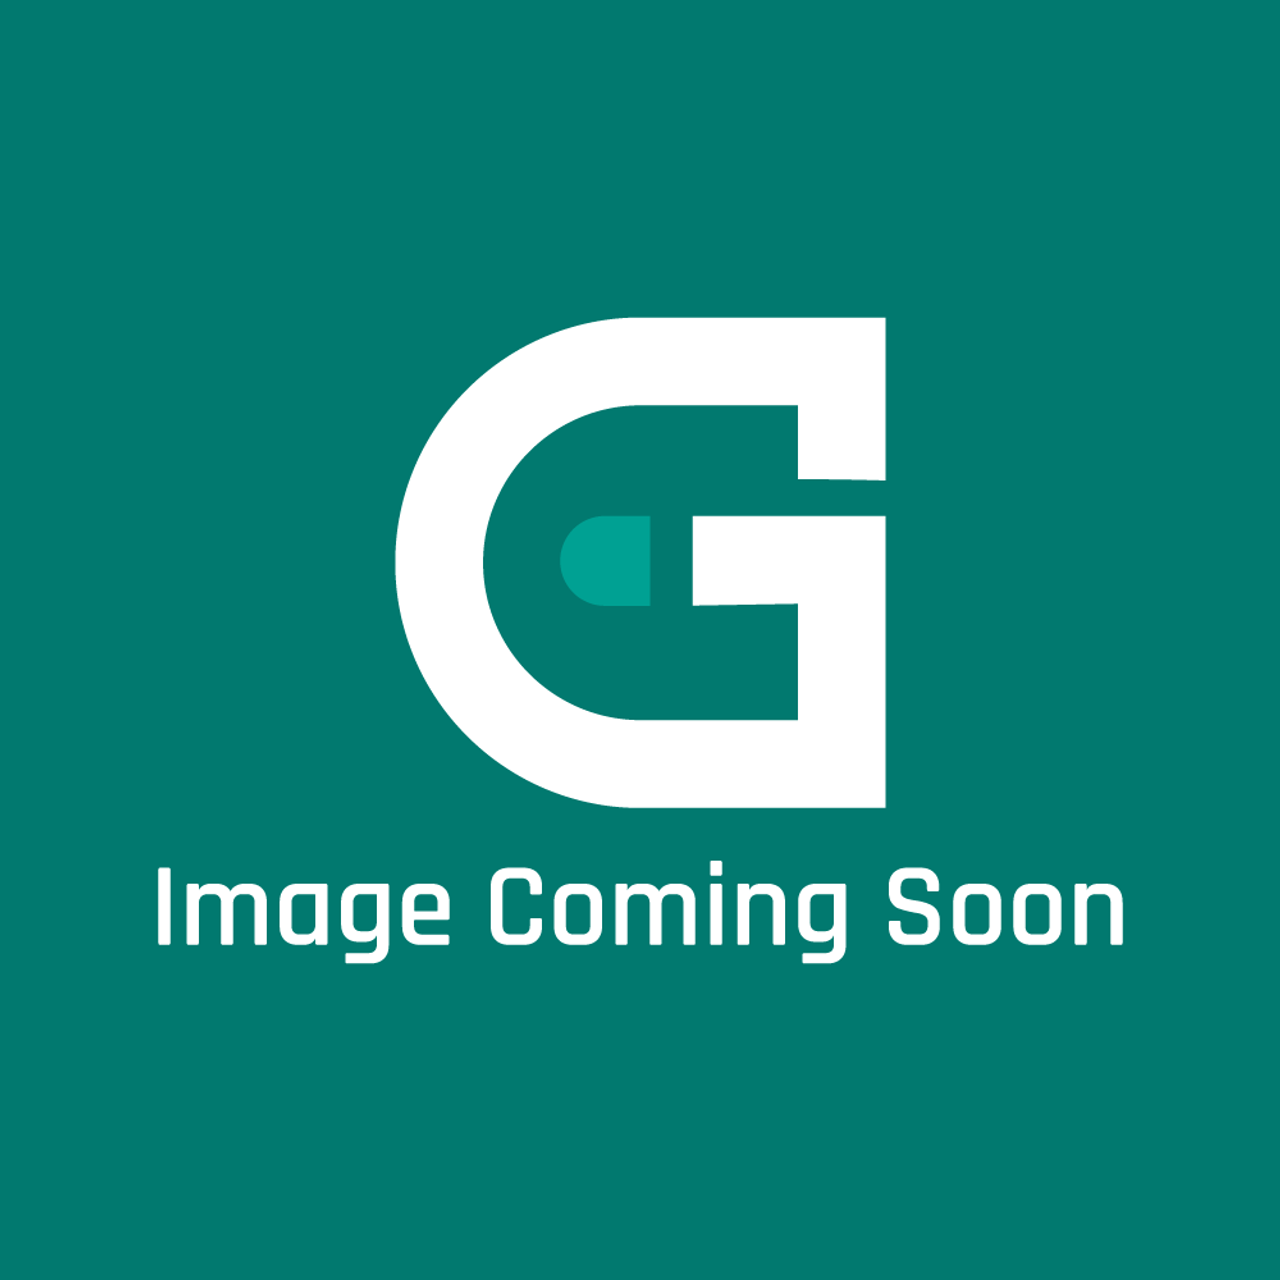 AGA Marvel RG4M997517 - Honeywell Valve V179-8 480 Cd - Image Coming Soon!